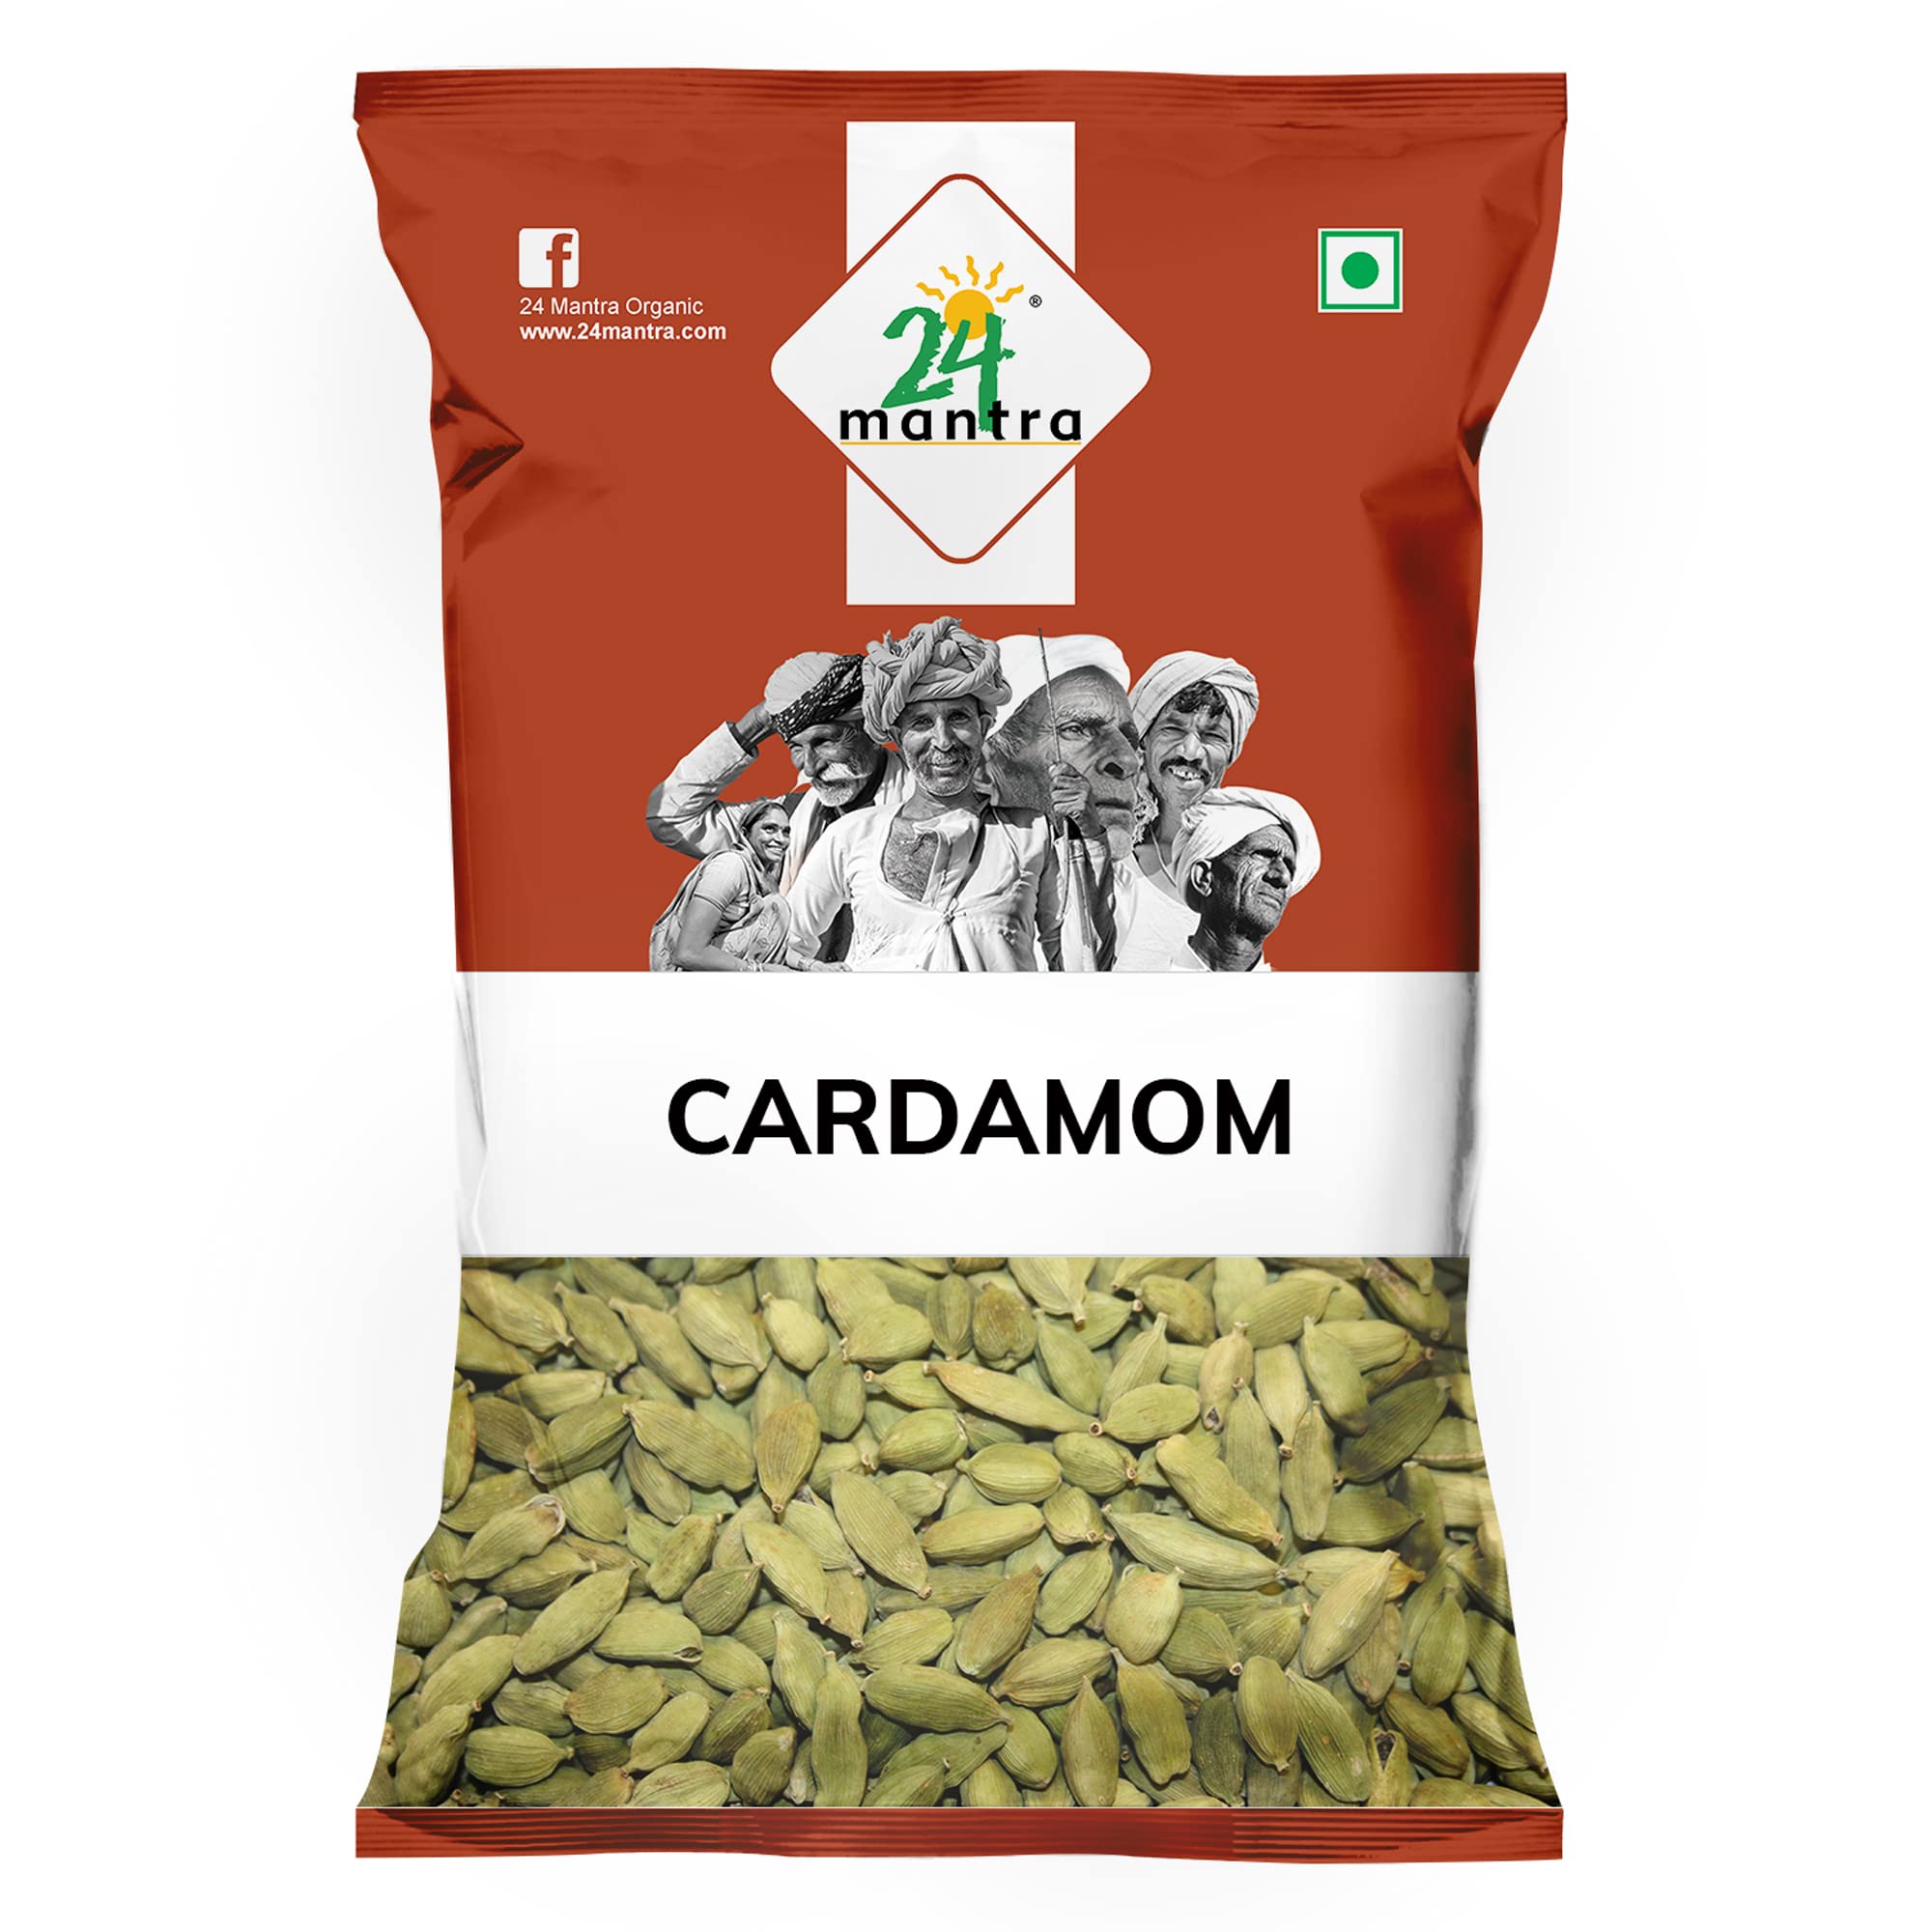 24 Organic Mantra Products Cardamom, 50g